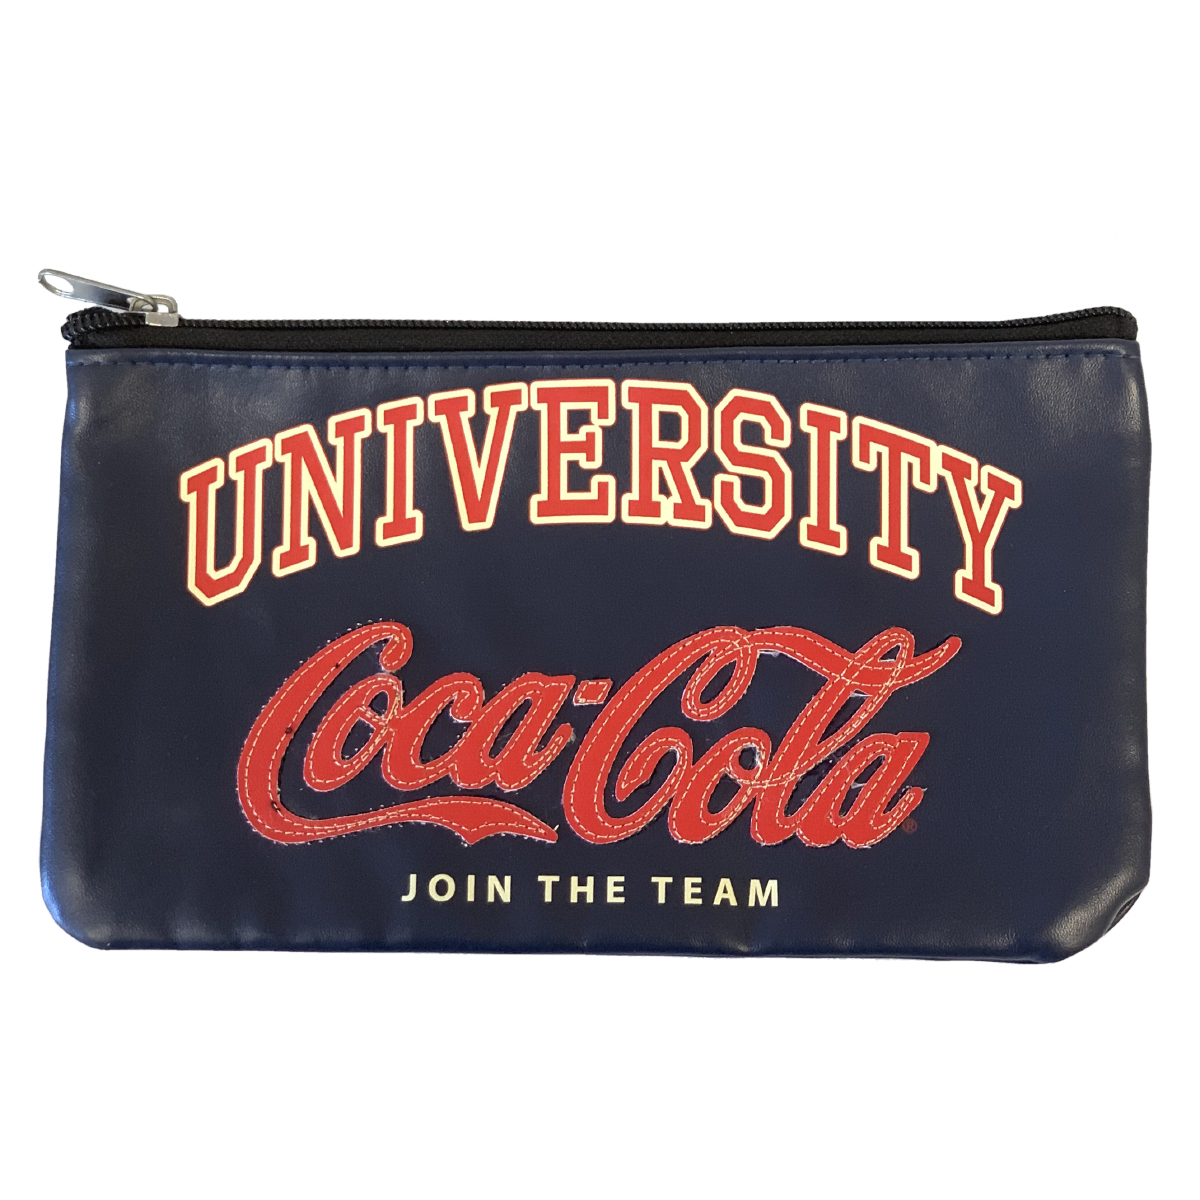 Coca cola University cosmetic bag